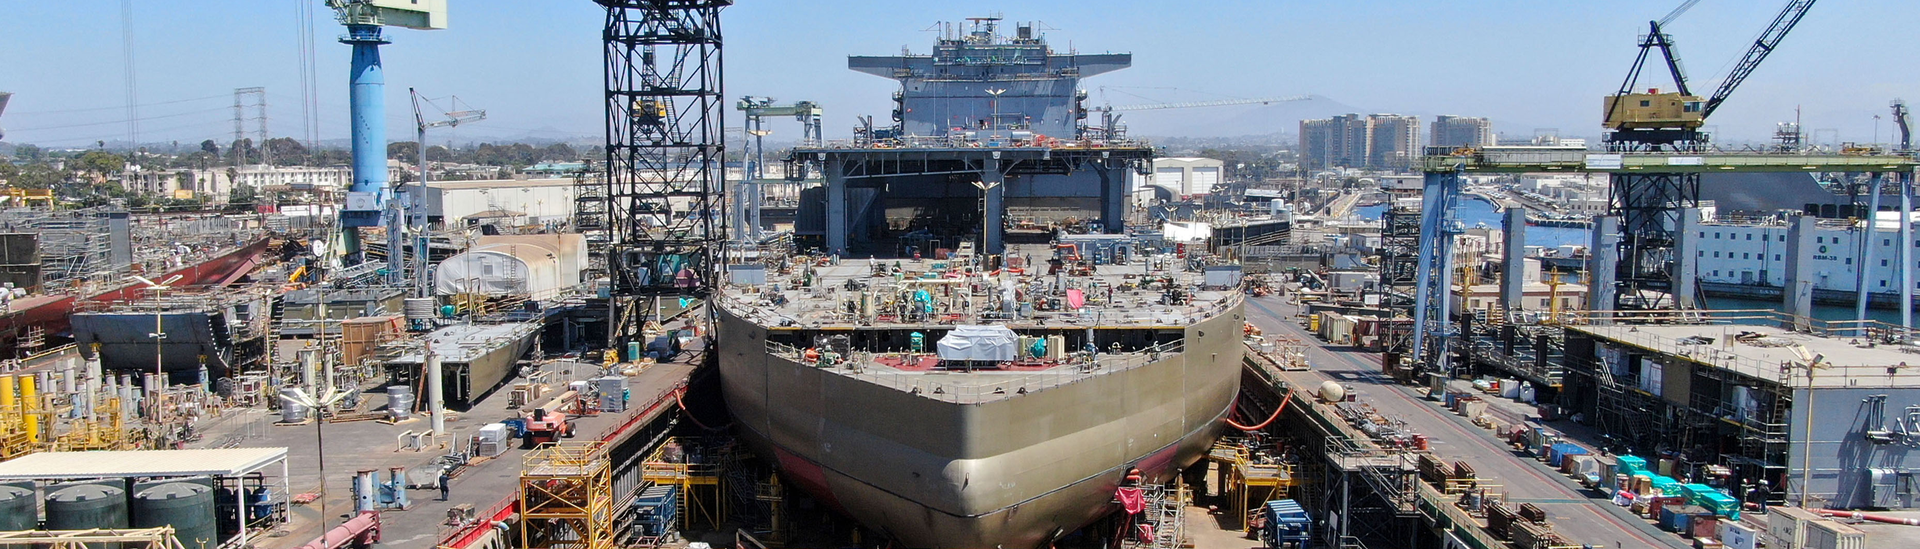 Shipyard at NASSCO in San Diego